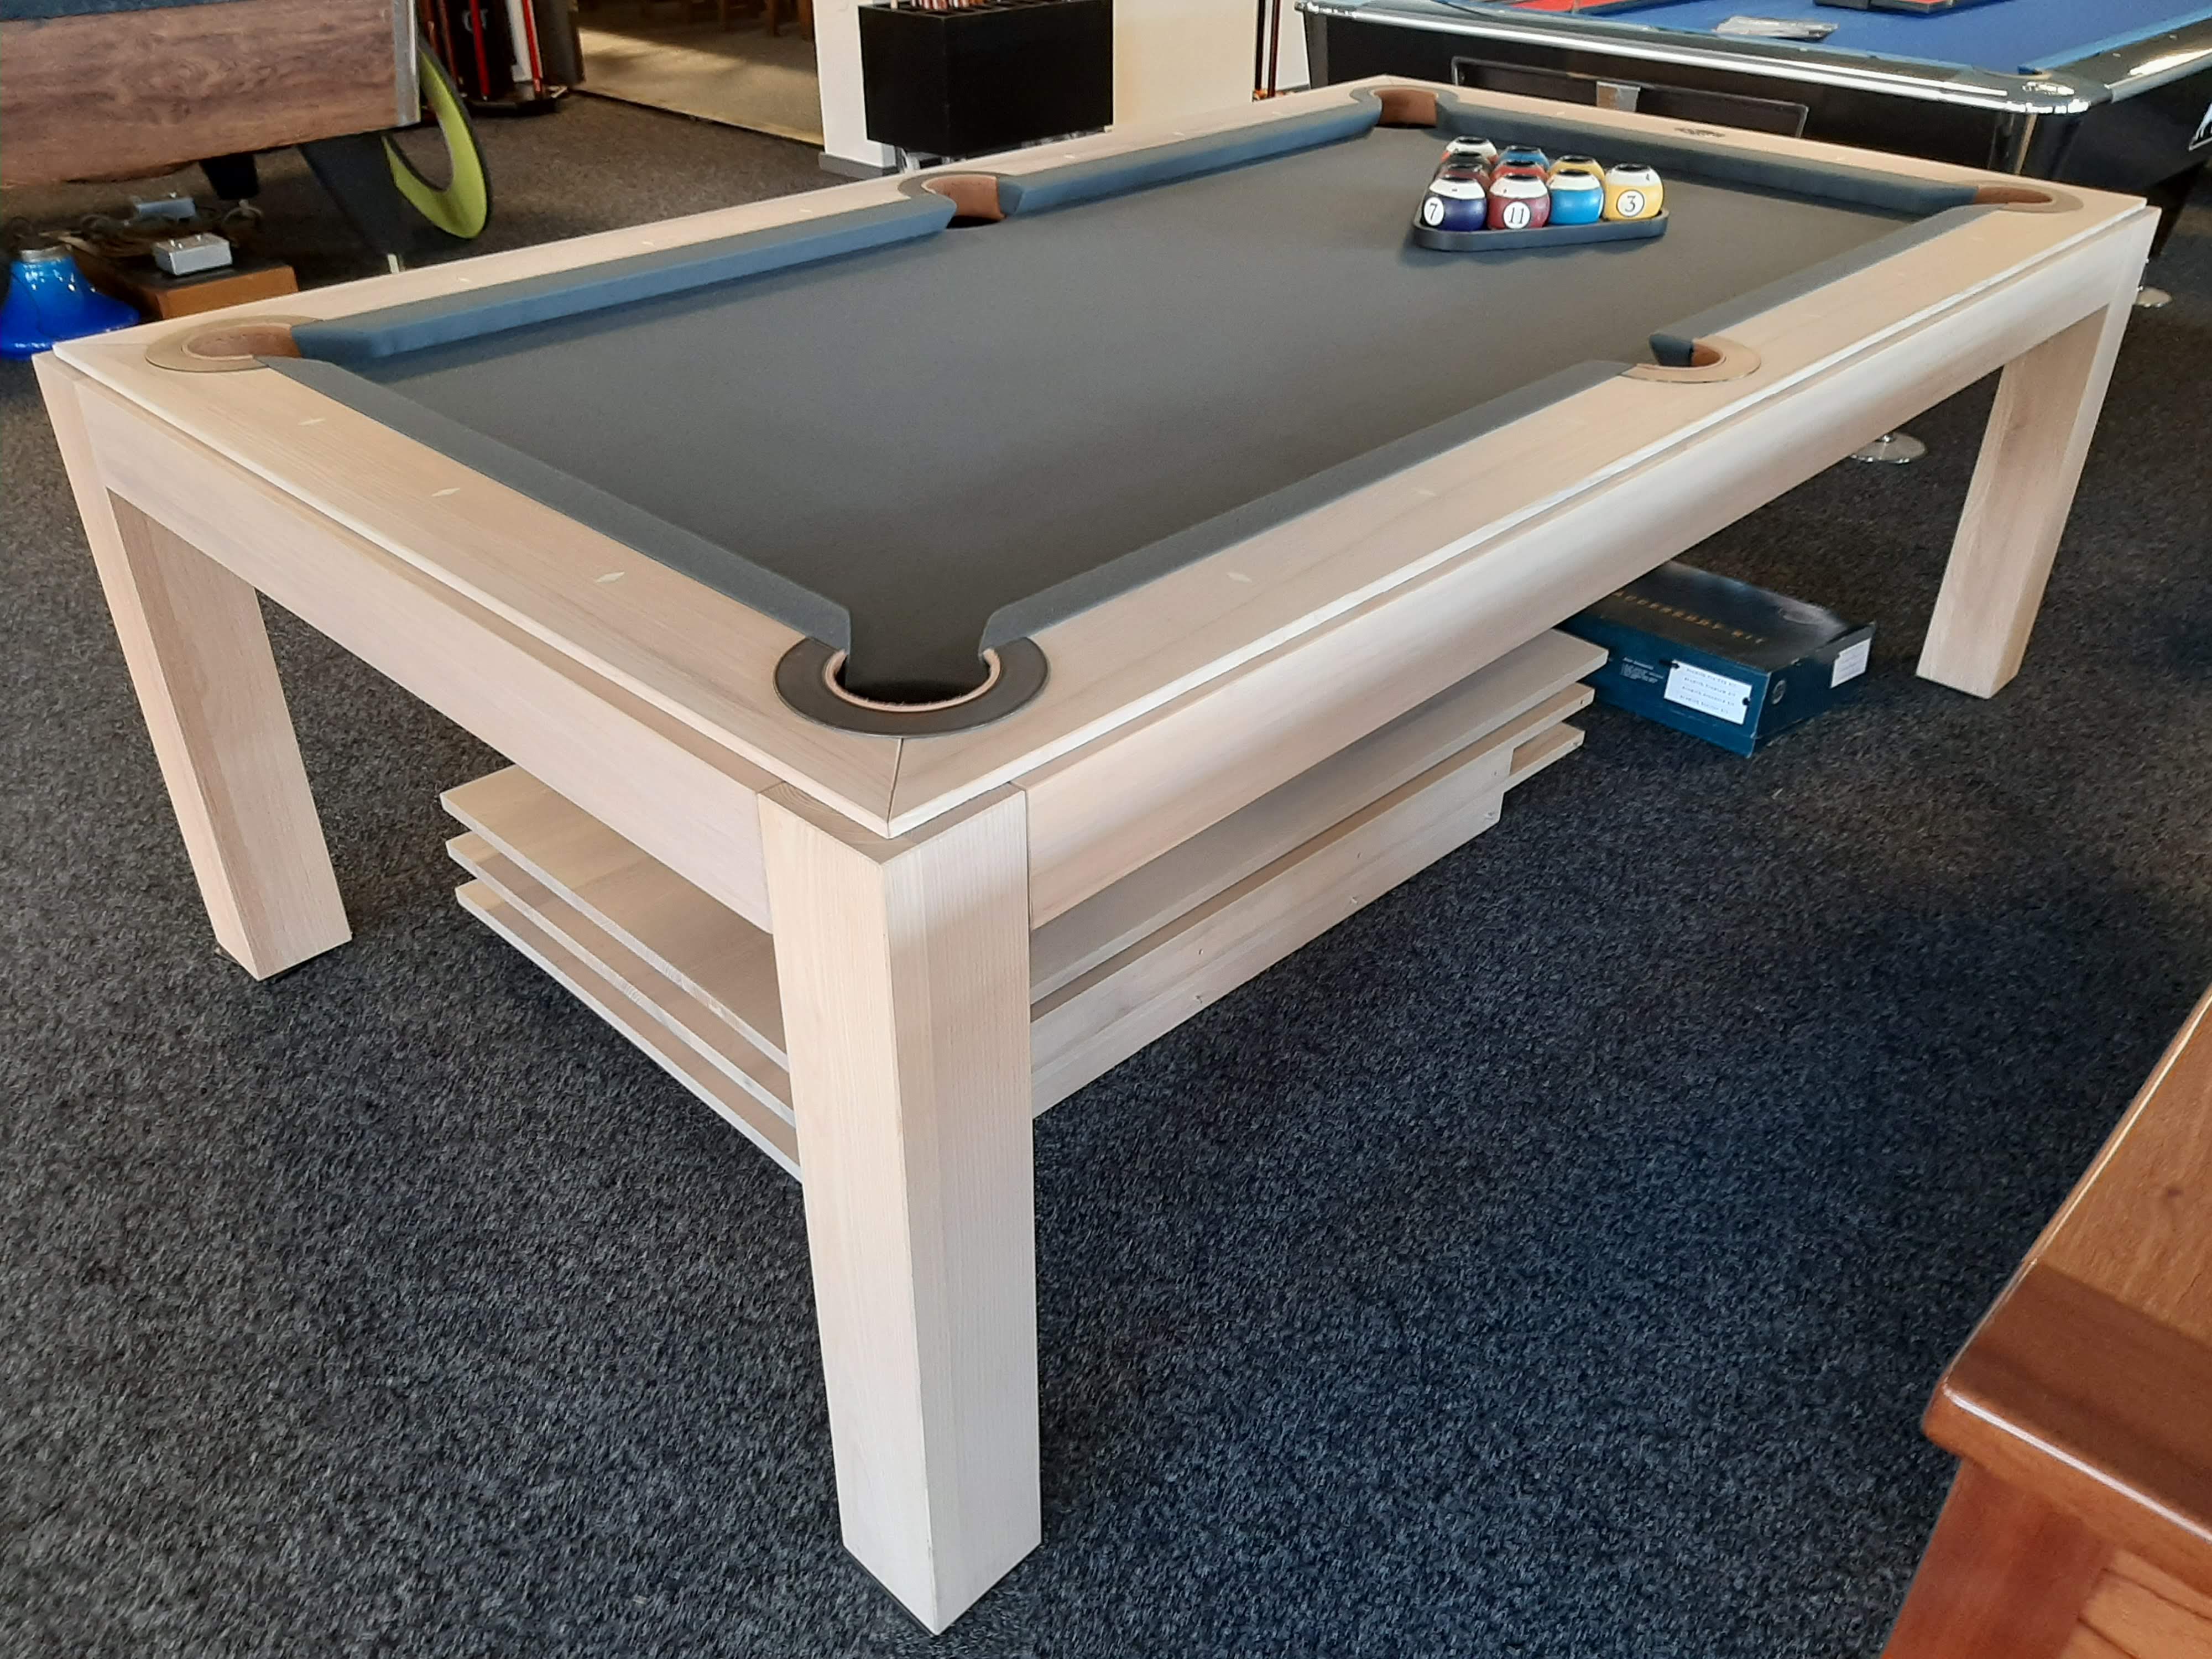 Pilfer Oprichter Preek Amsterdam pool-tafel (zo goed als nieuw) - Blank (7 ft.) - Brock  Biljartfabriek en Amusement